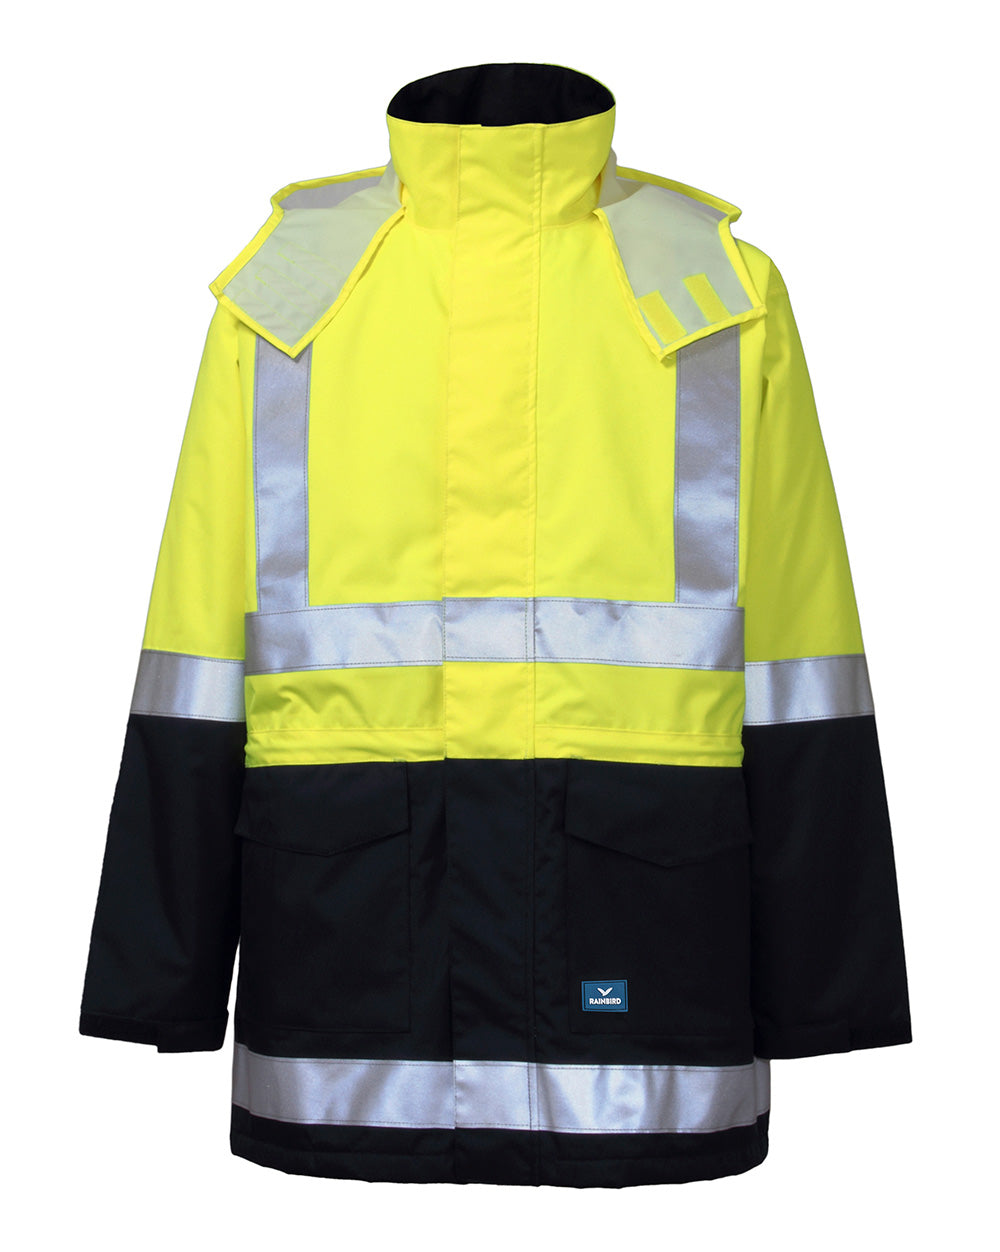 Sentinel Jacket in Fluoro Yellow & Navy